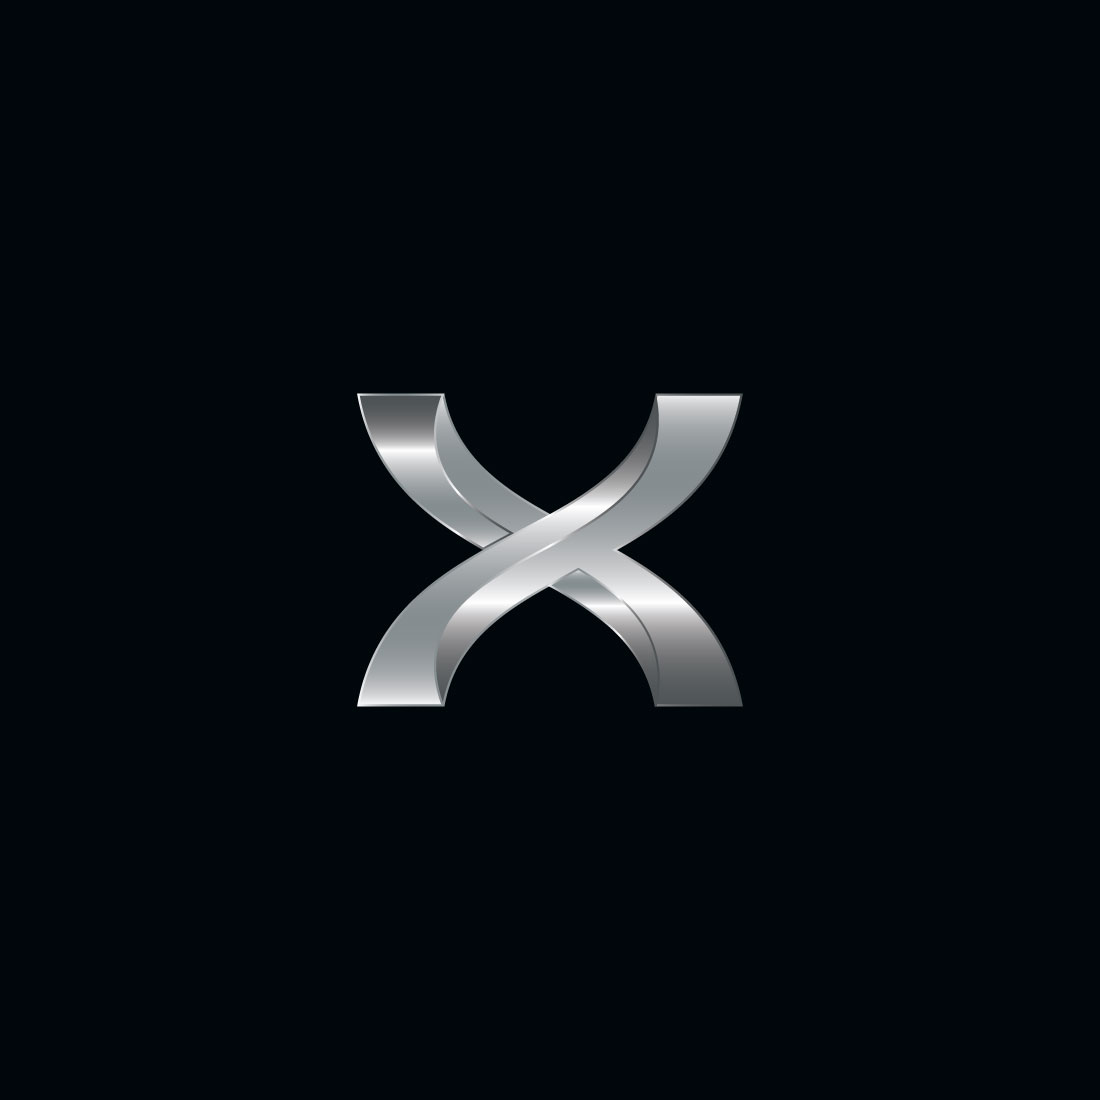 X Logo cover image.